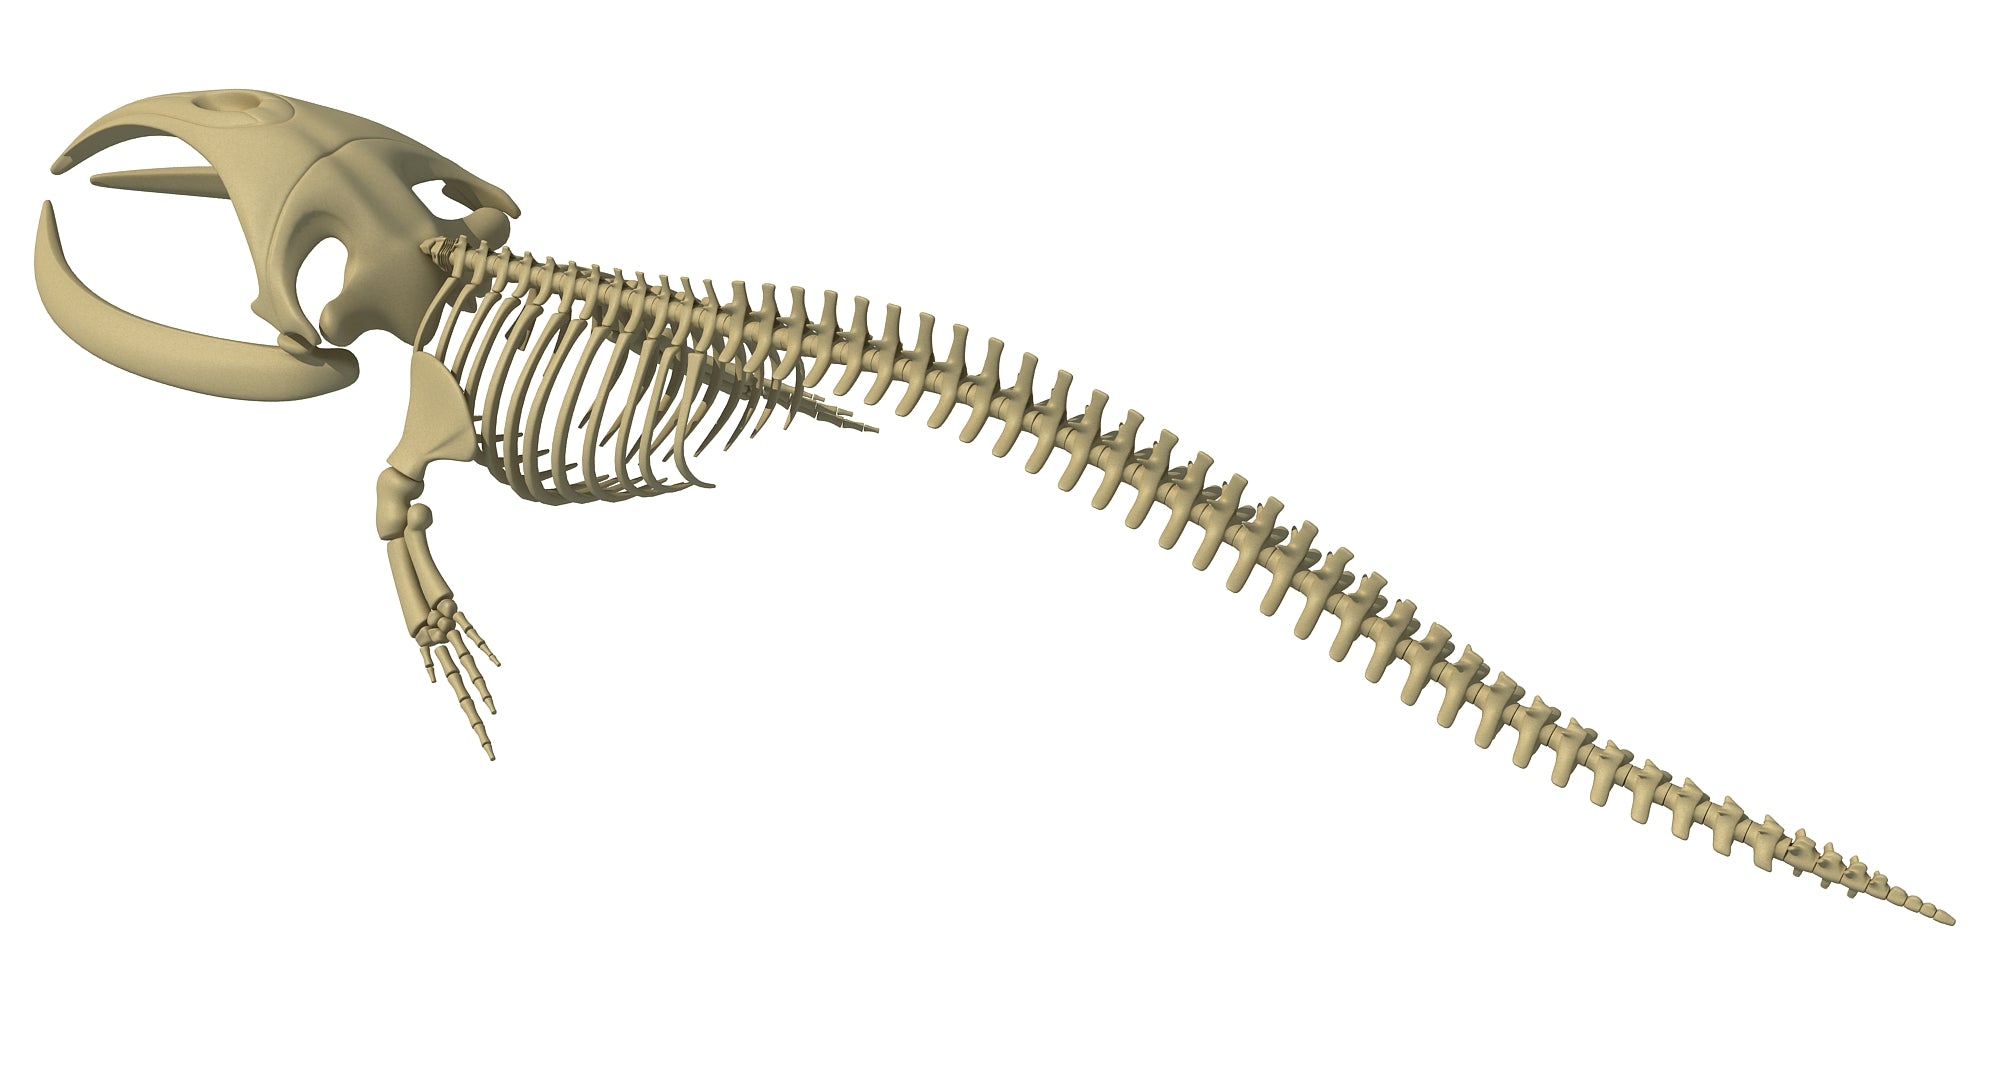 Right Whale Skeleton